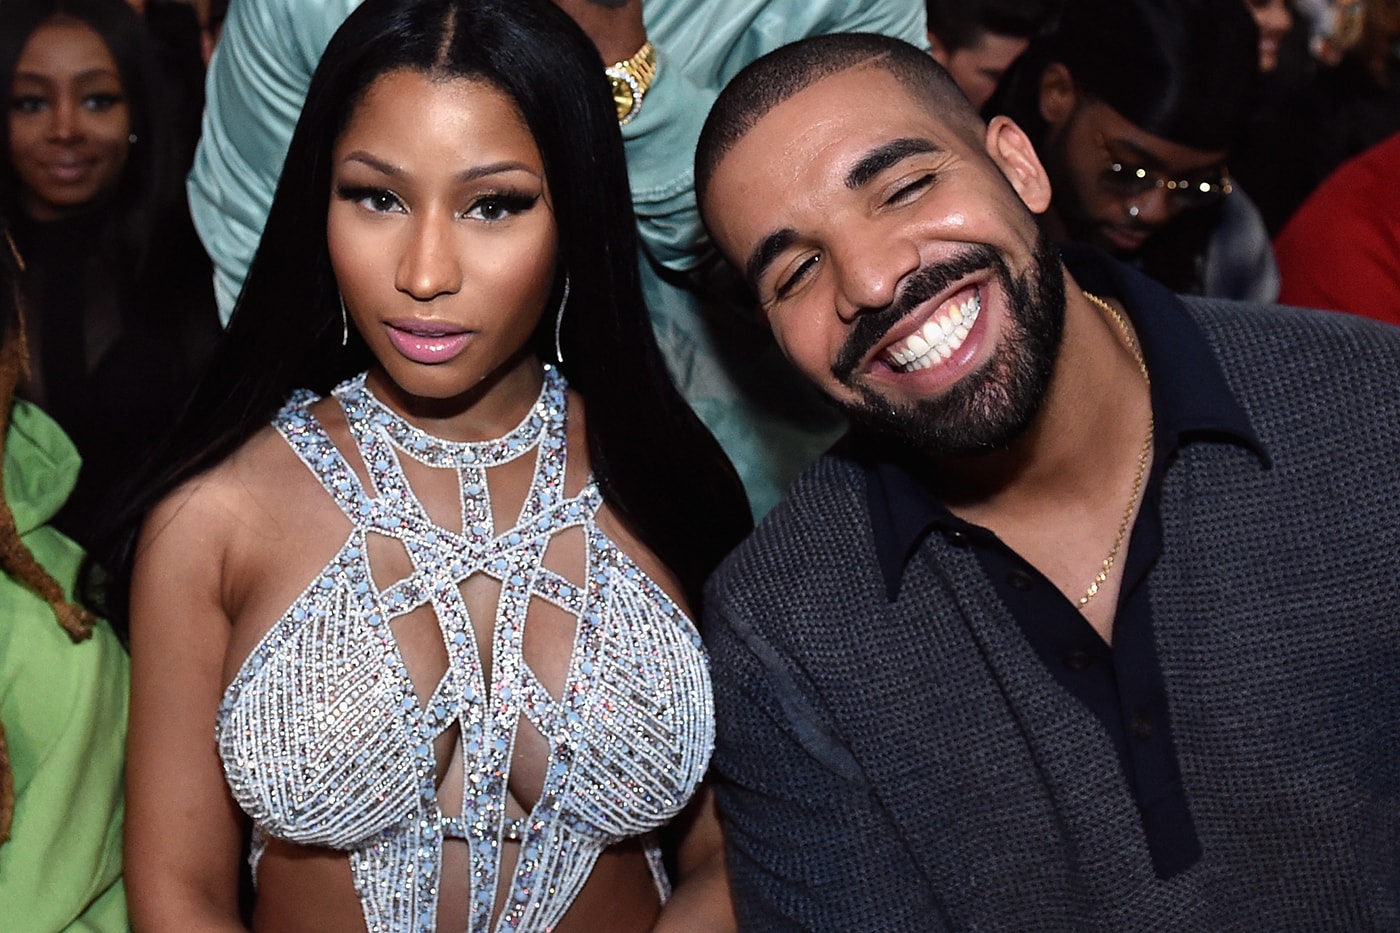 Drake Drops by Nicki Minaj Studio ymcmb hoodie new collab rumors queen certified lover boy announcement